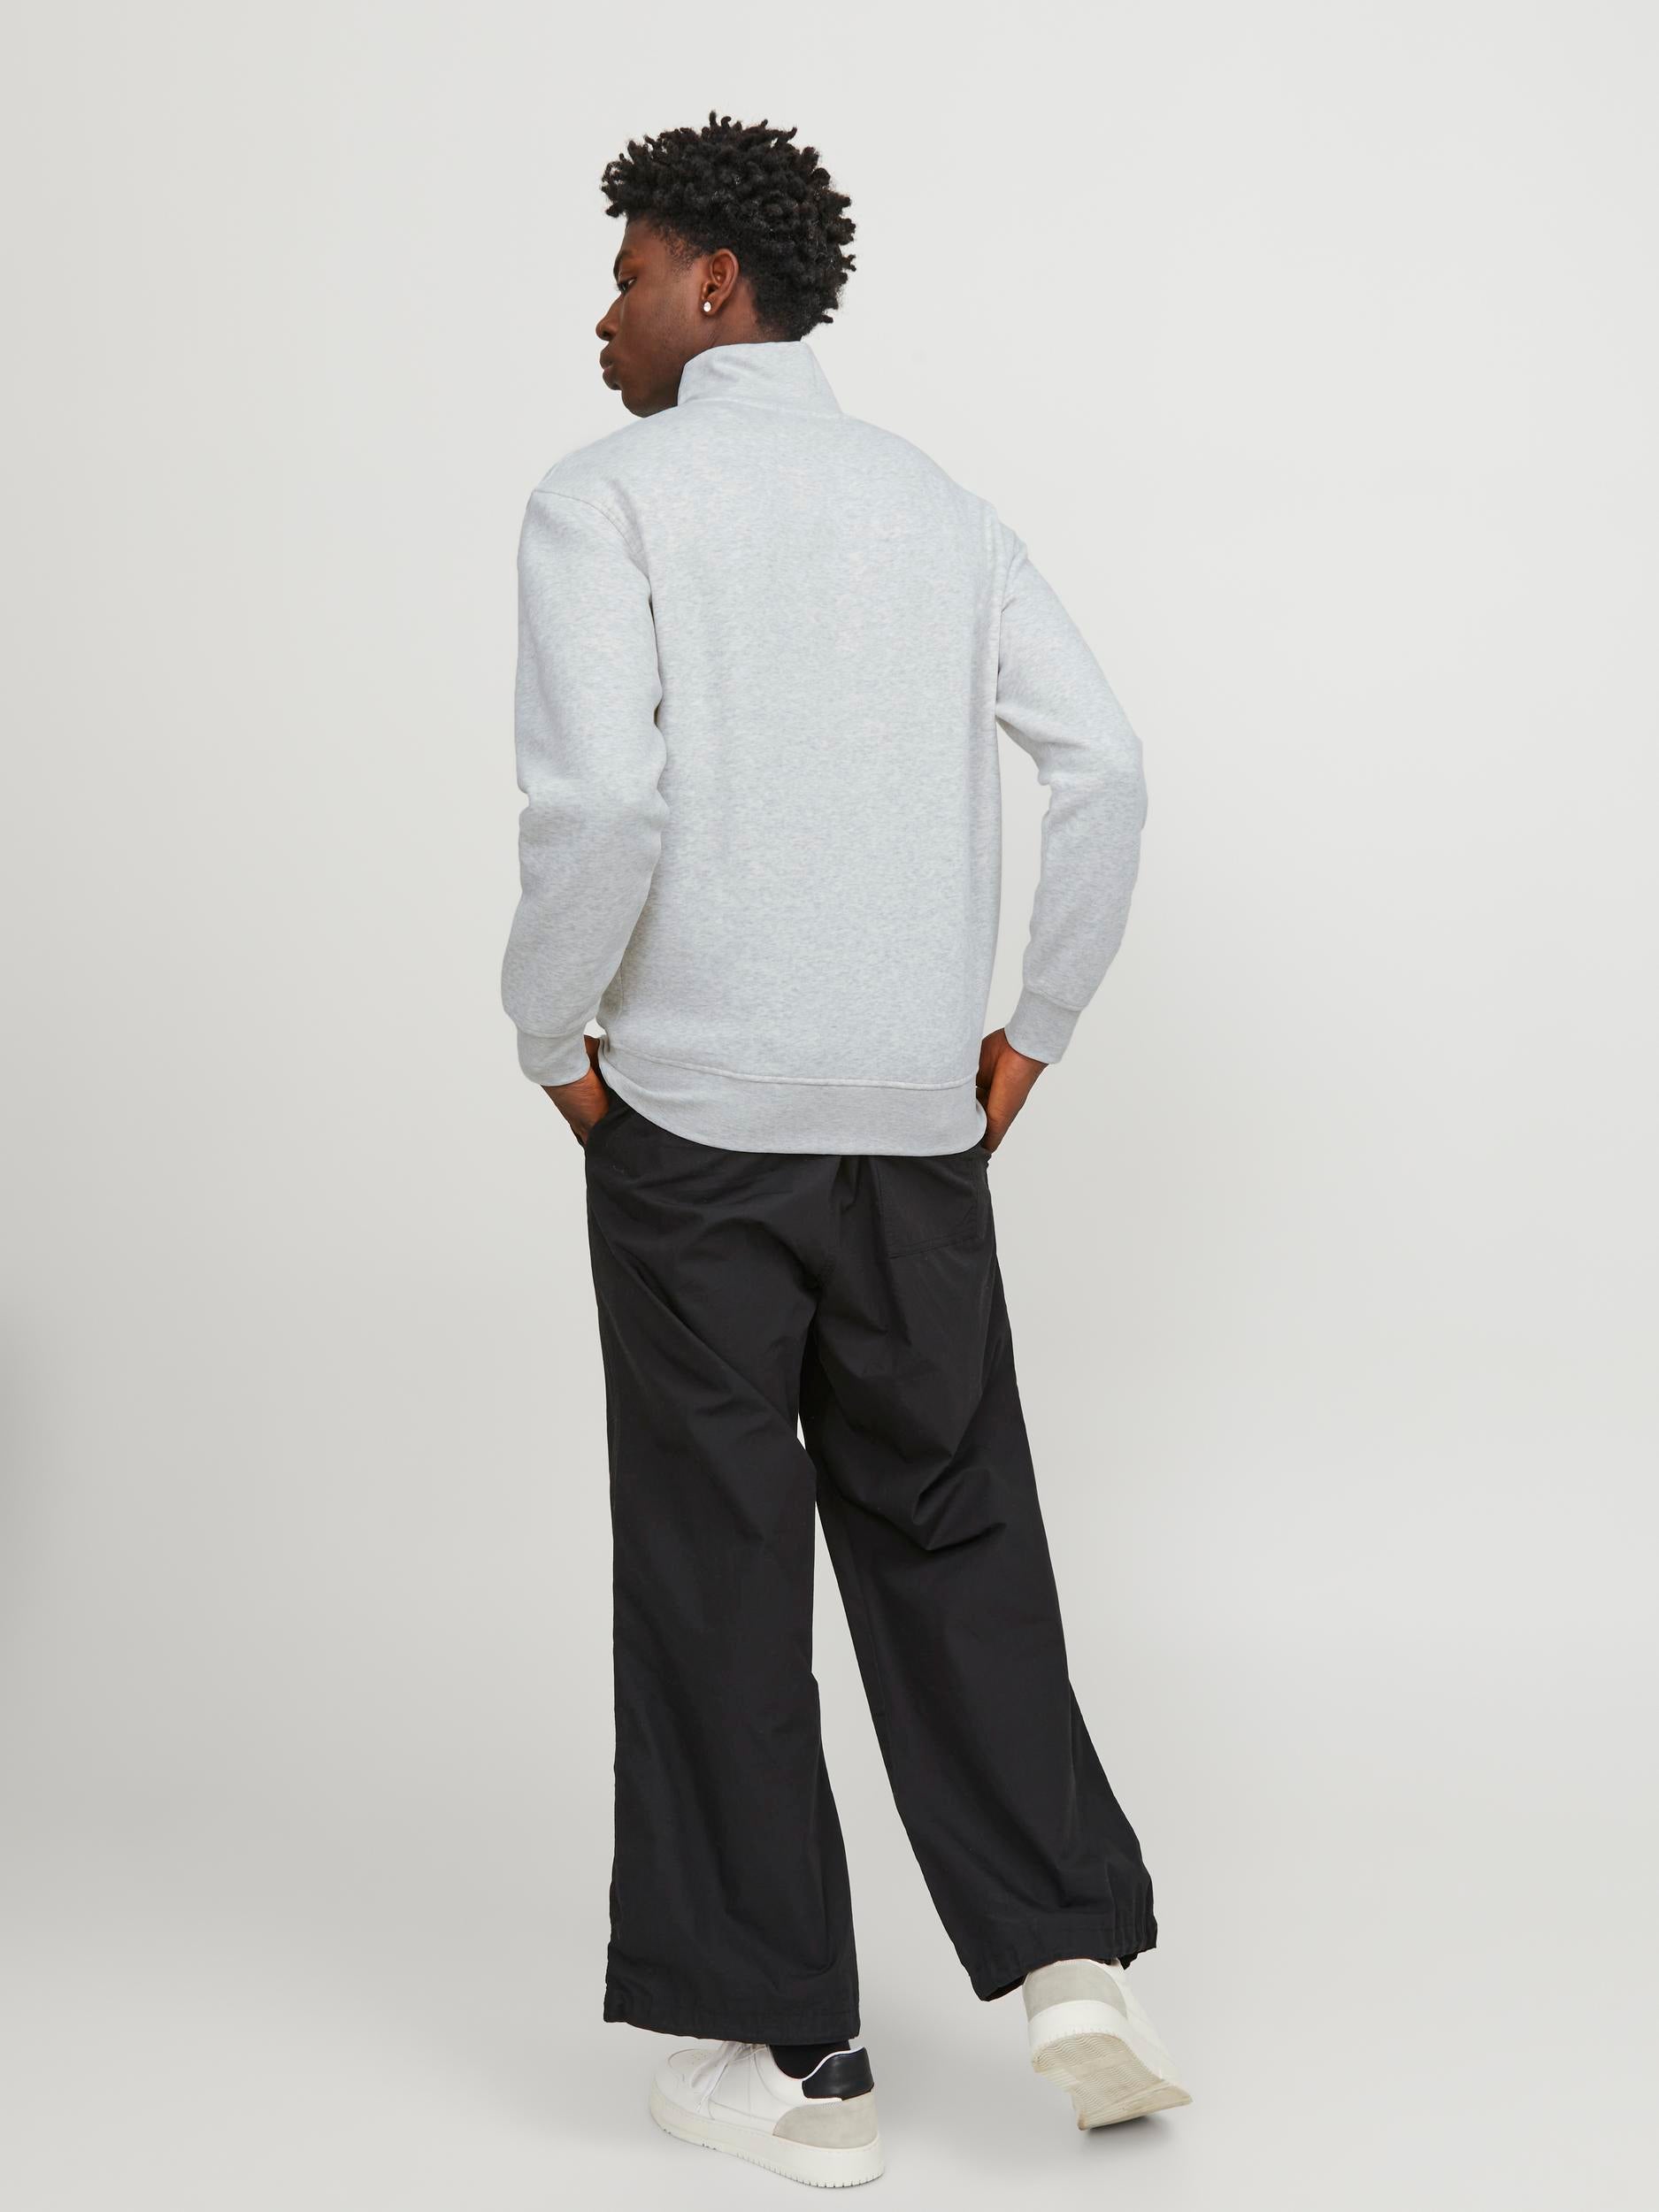 Men's Vesterbro Sweat Quarter Zip-White Melange-Model Back View